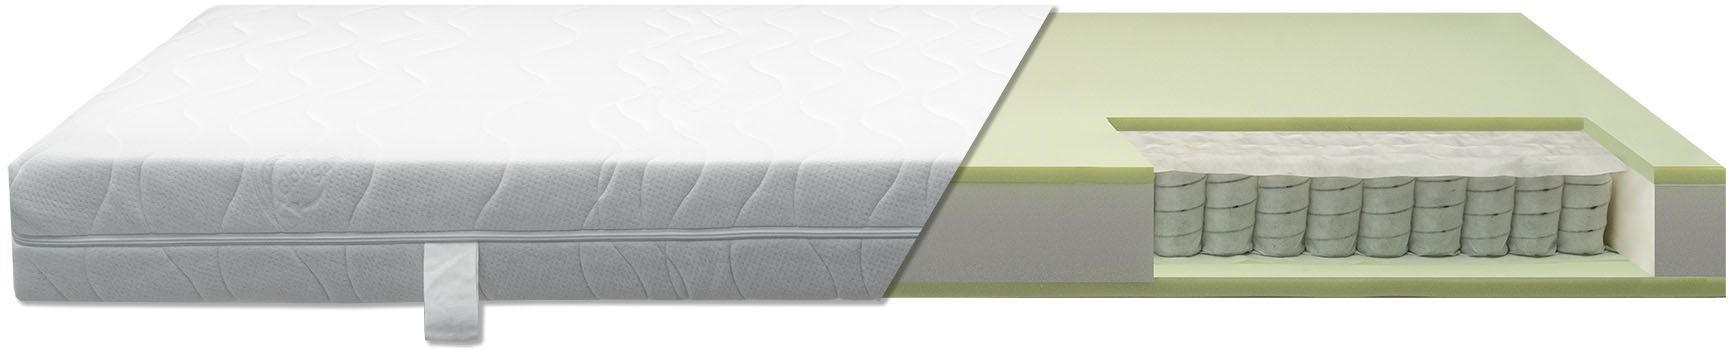 Breckle Pocketveringsmatras Green 300 GRS Aanhoudende kwaliteitsmatrassen iedereen portemonnee hoogte 18 cm bij